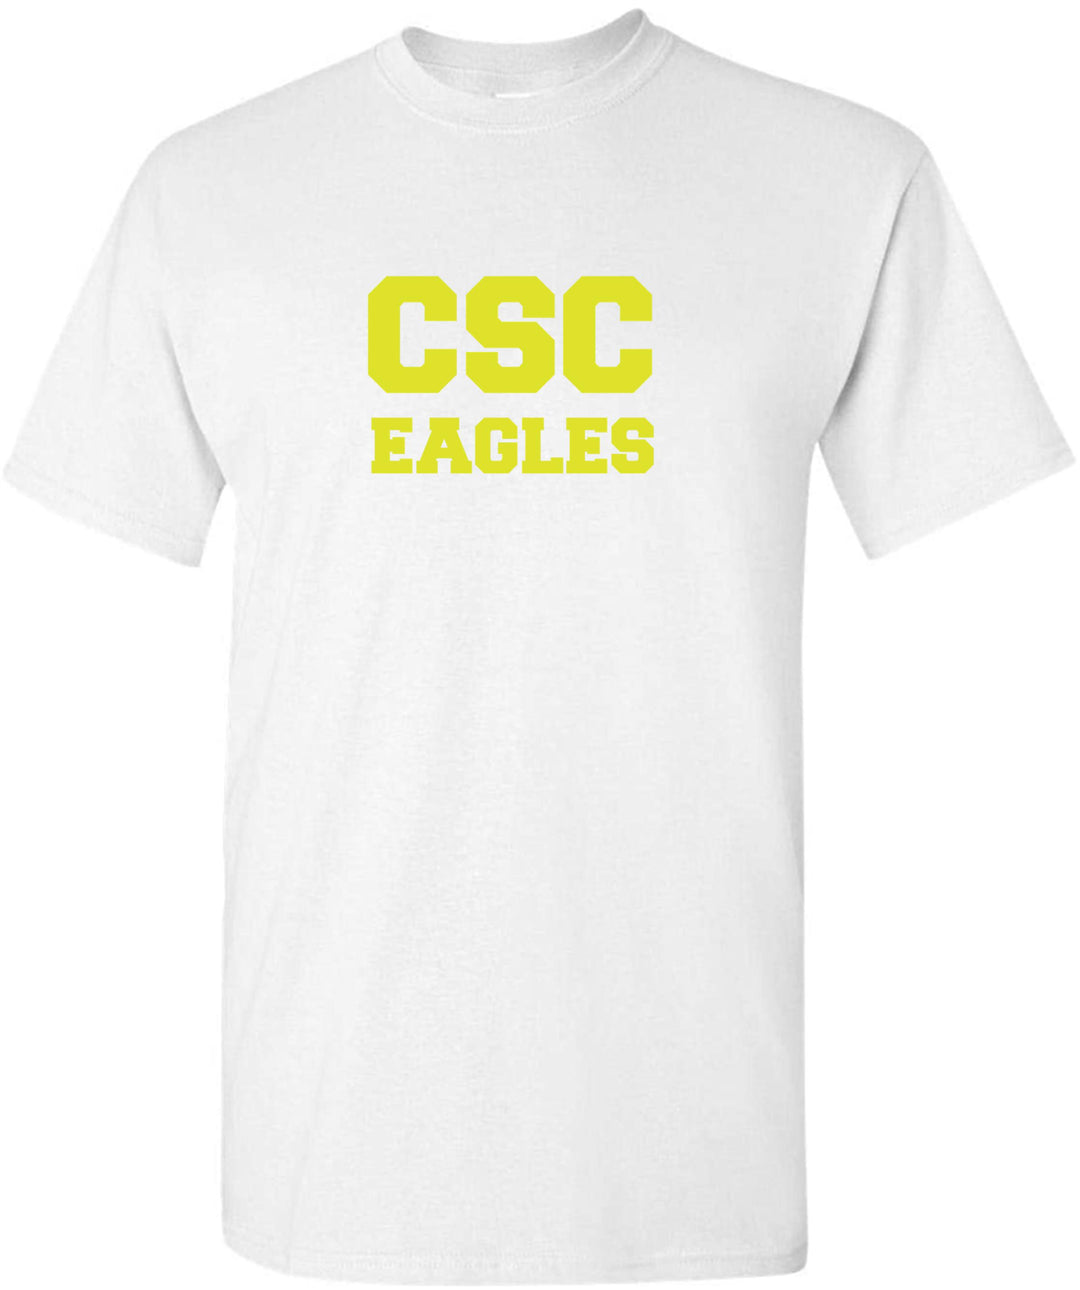 CSC Short-Sleeve T-Shirt Calcasieu Soccer Club MENS LARGE WHITE - Third Coast Soccer